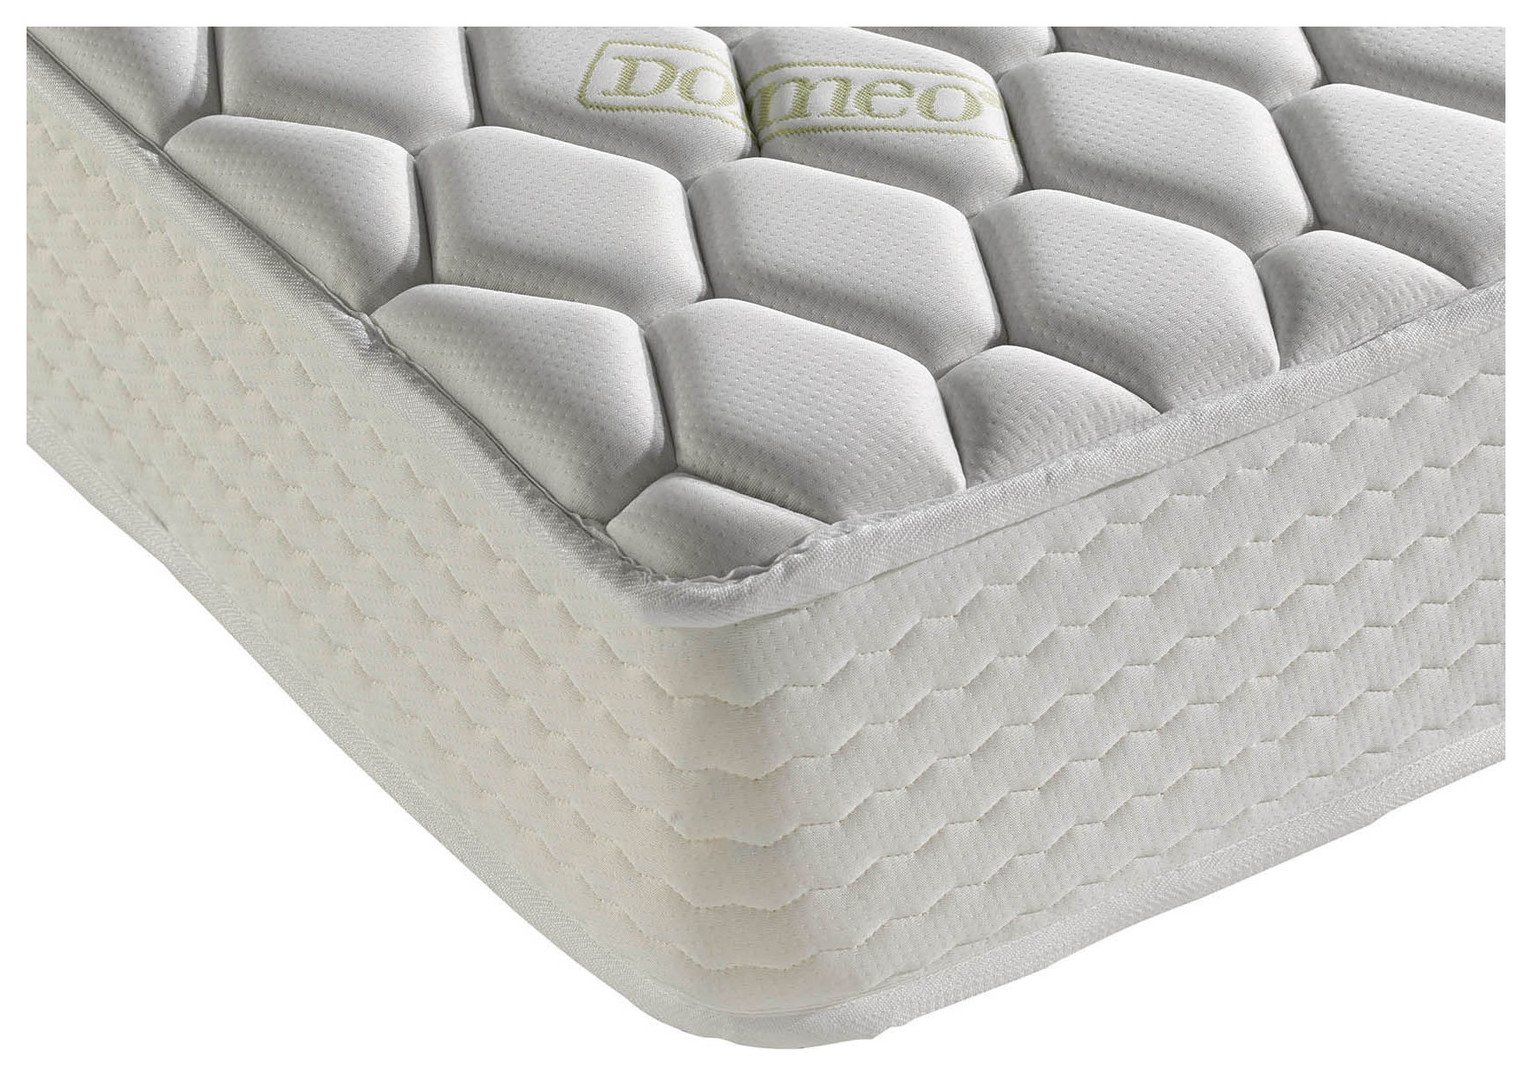 dormeo deluxe memory foam single mattress